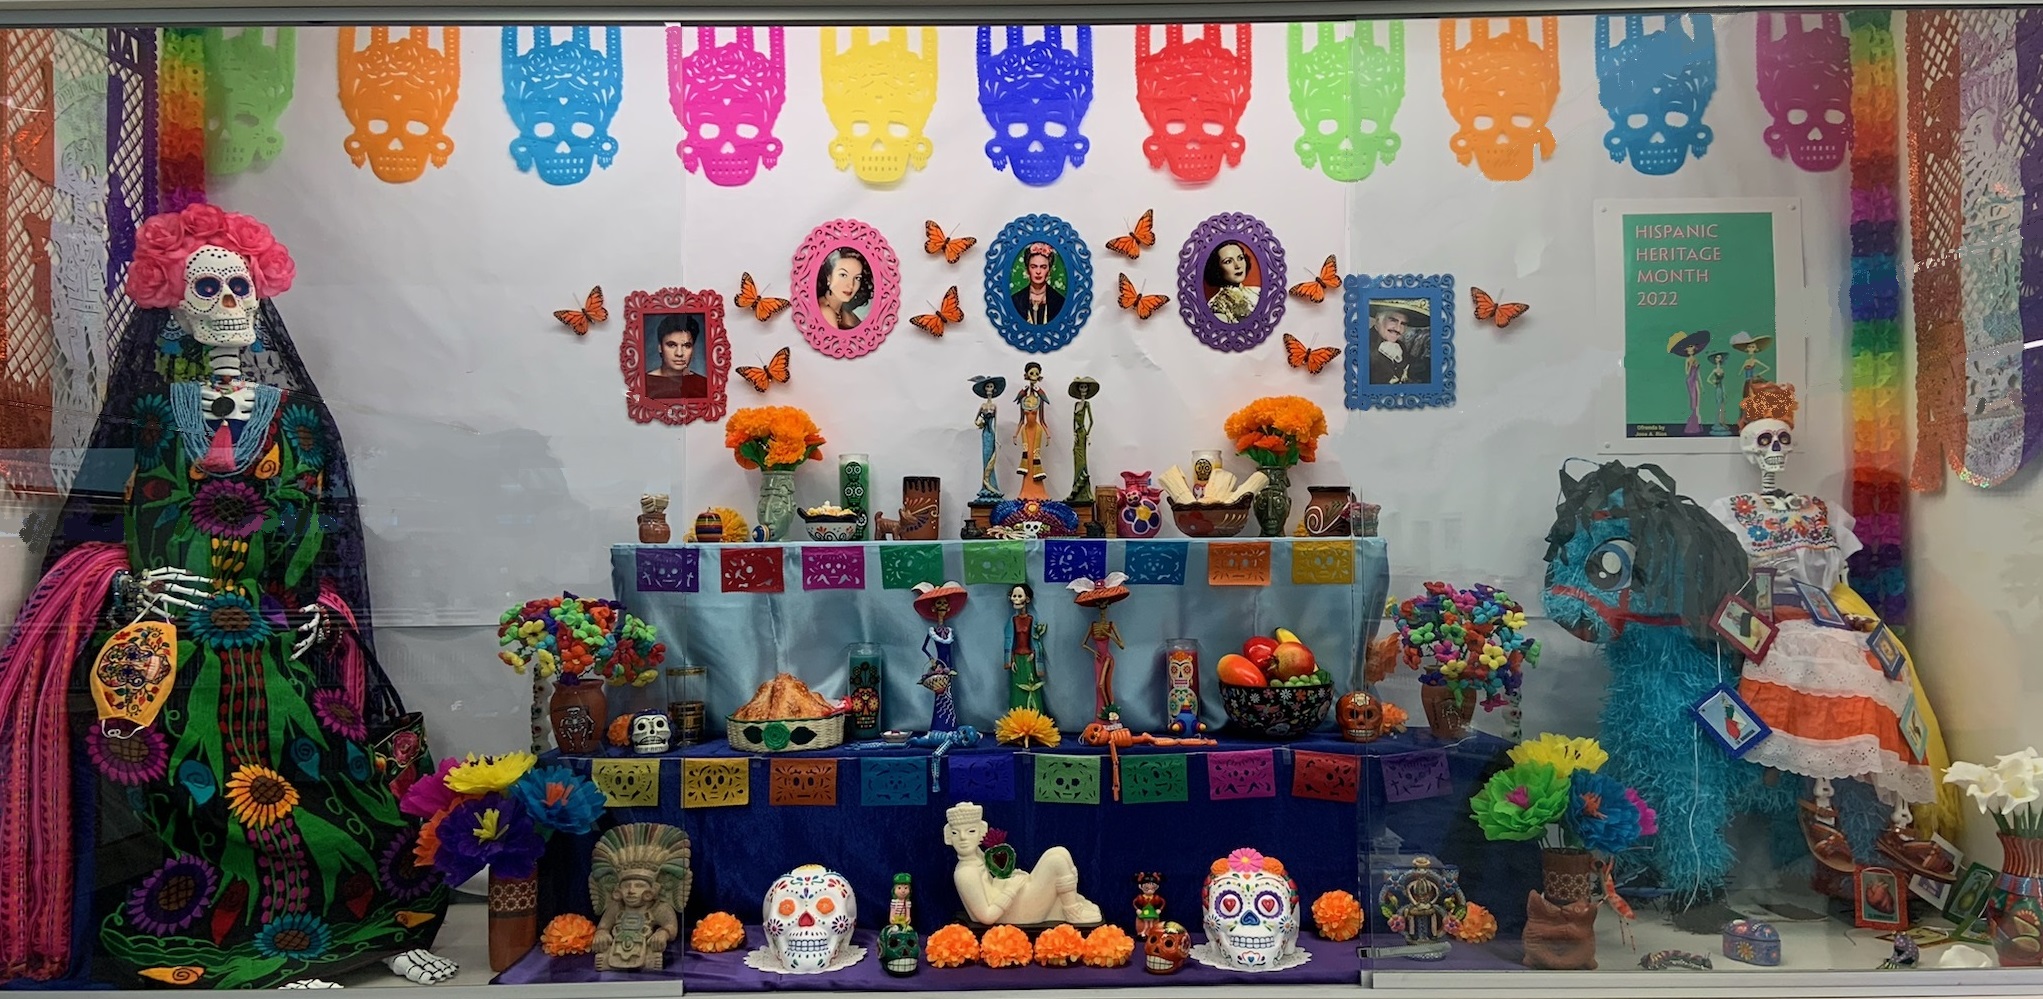 A large display case holding colorful dia de los muertos decorations